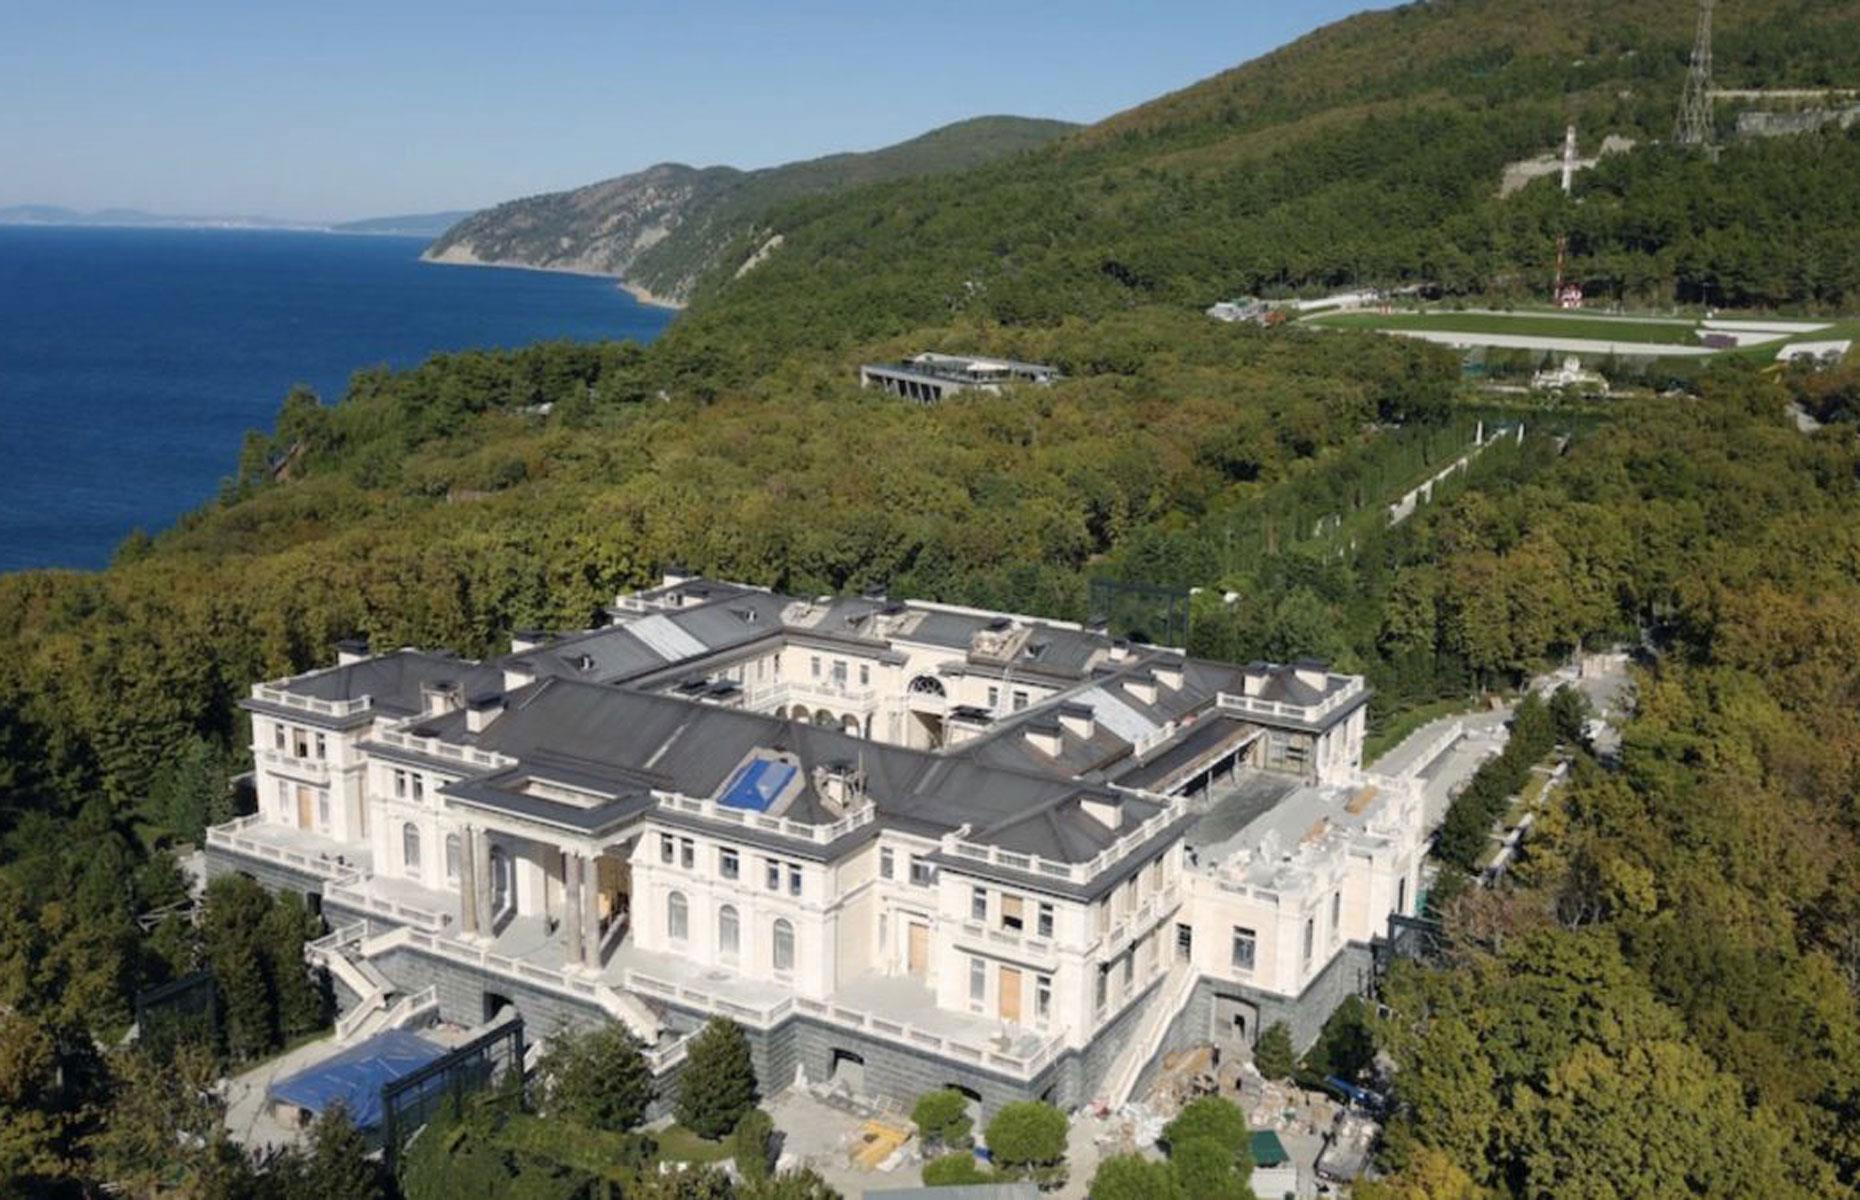 Putin's Palace on the Black Sea coast